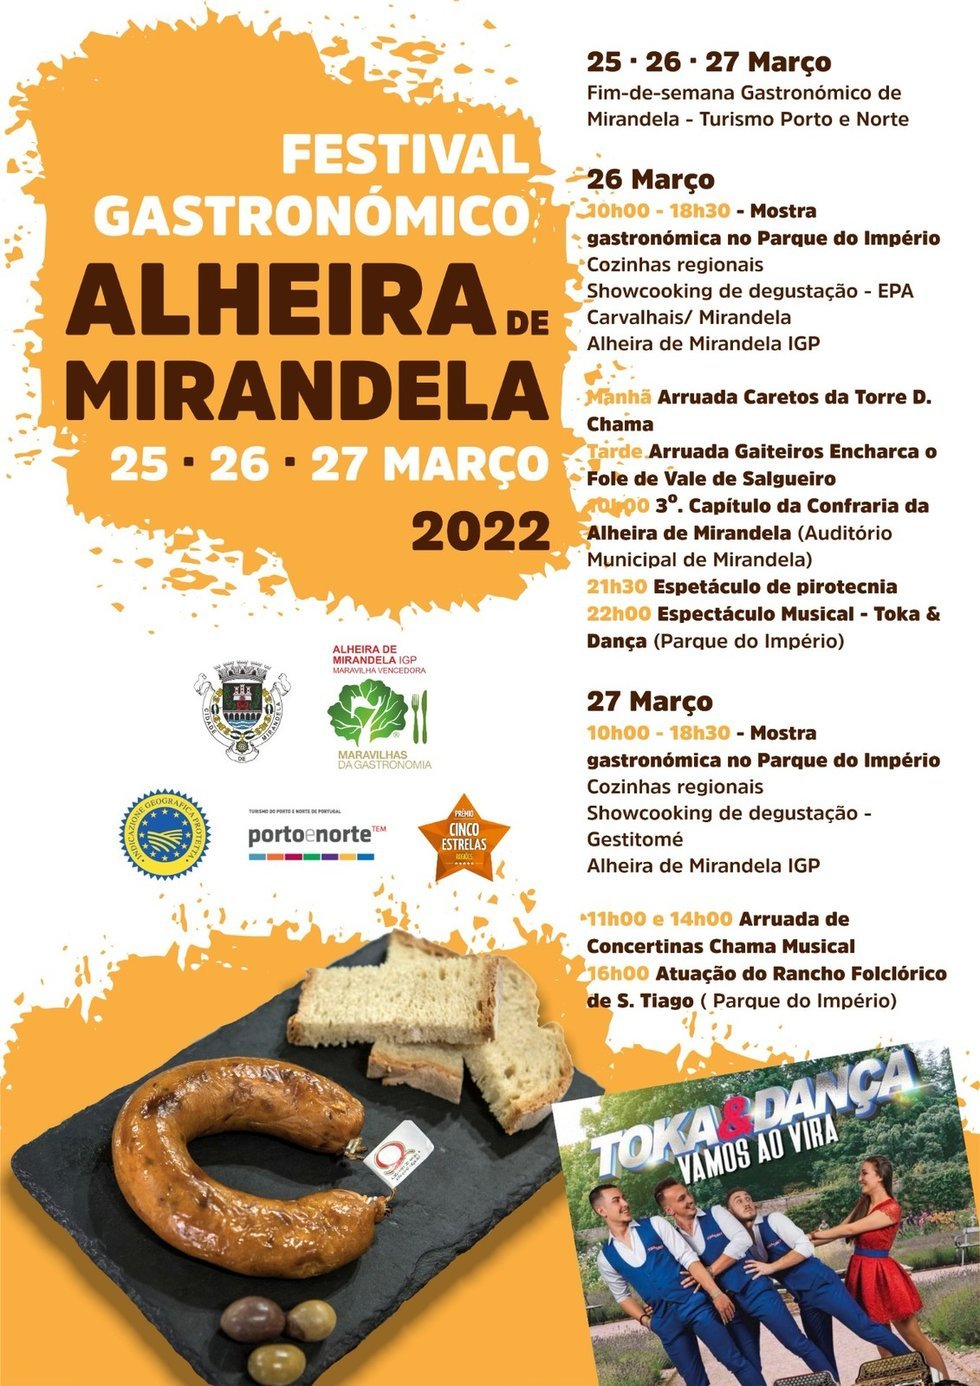 Festival Gastronómico da Alheira de Mirandela 2022